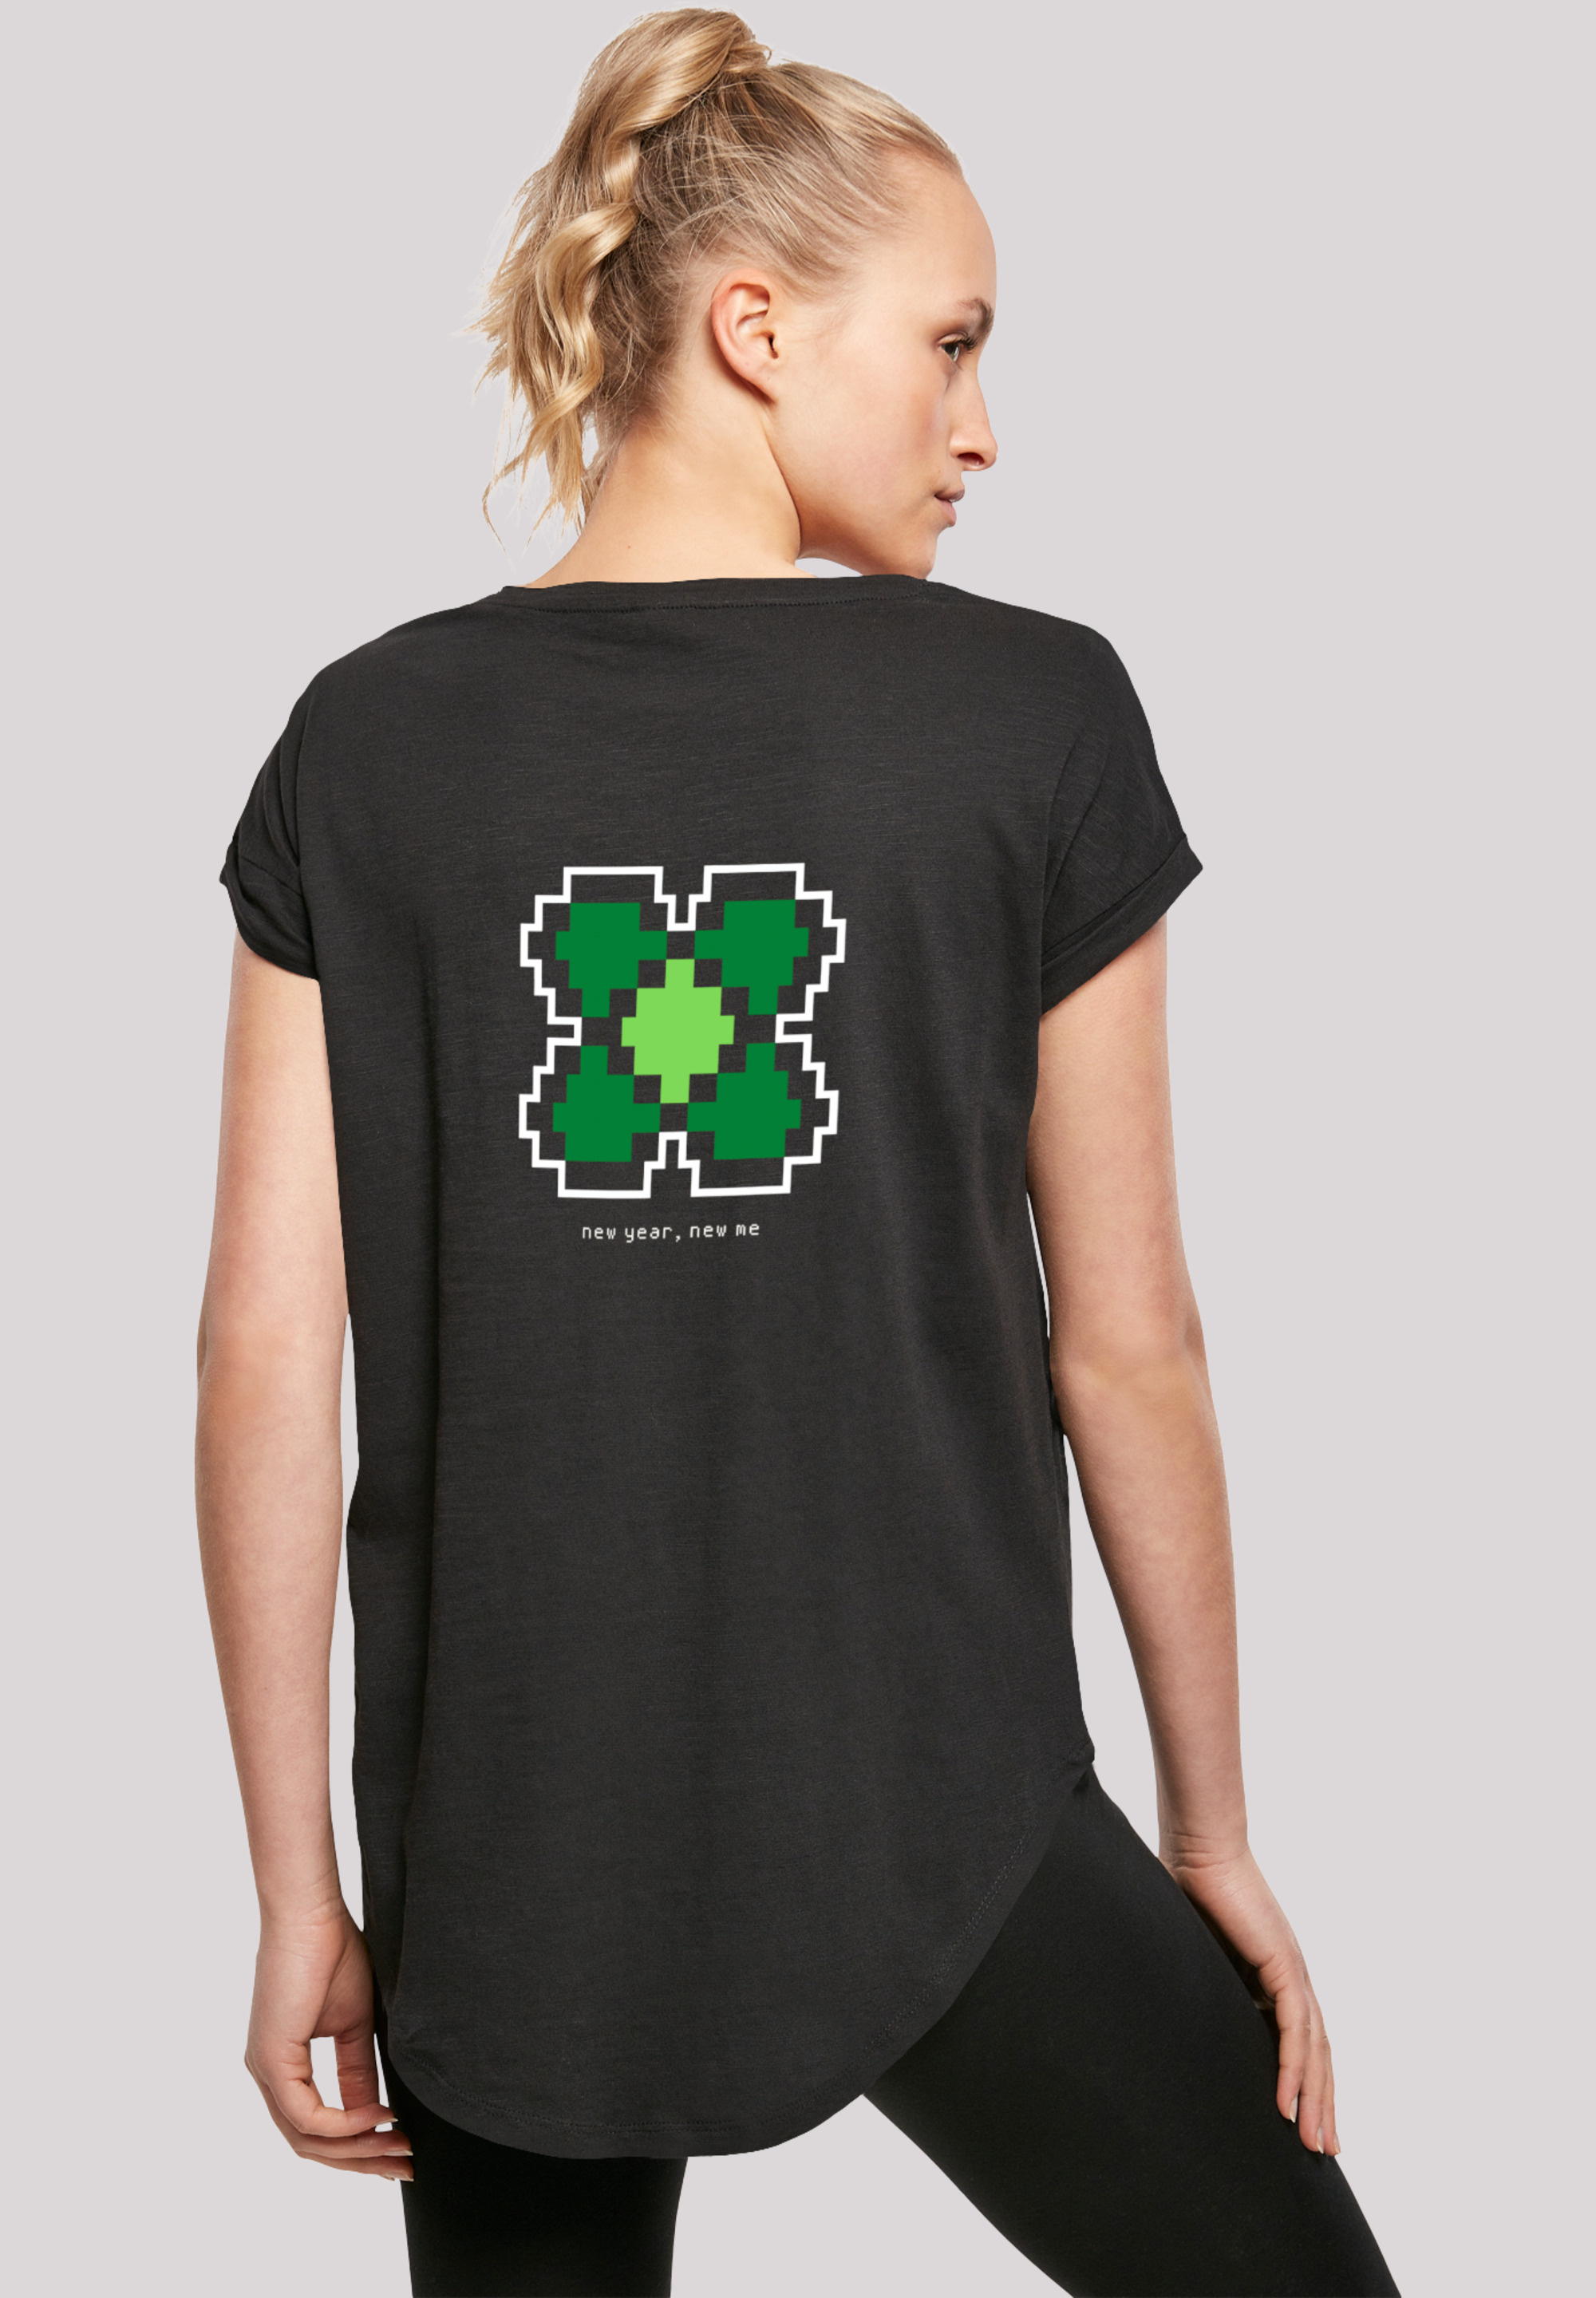 Happy »Pixel Herz Year BAUR F4NT4STIC kaufen | Silvester«, New Print T-Shirt online